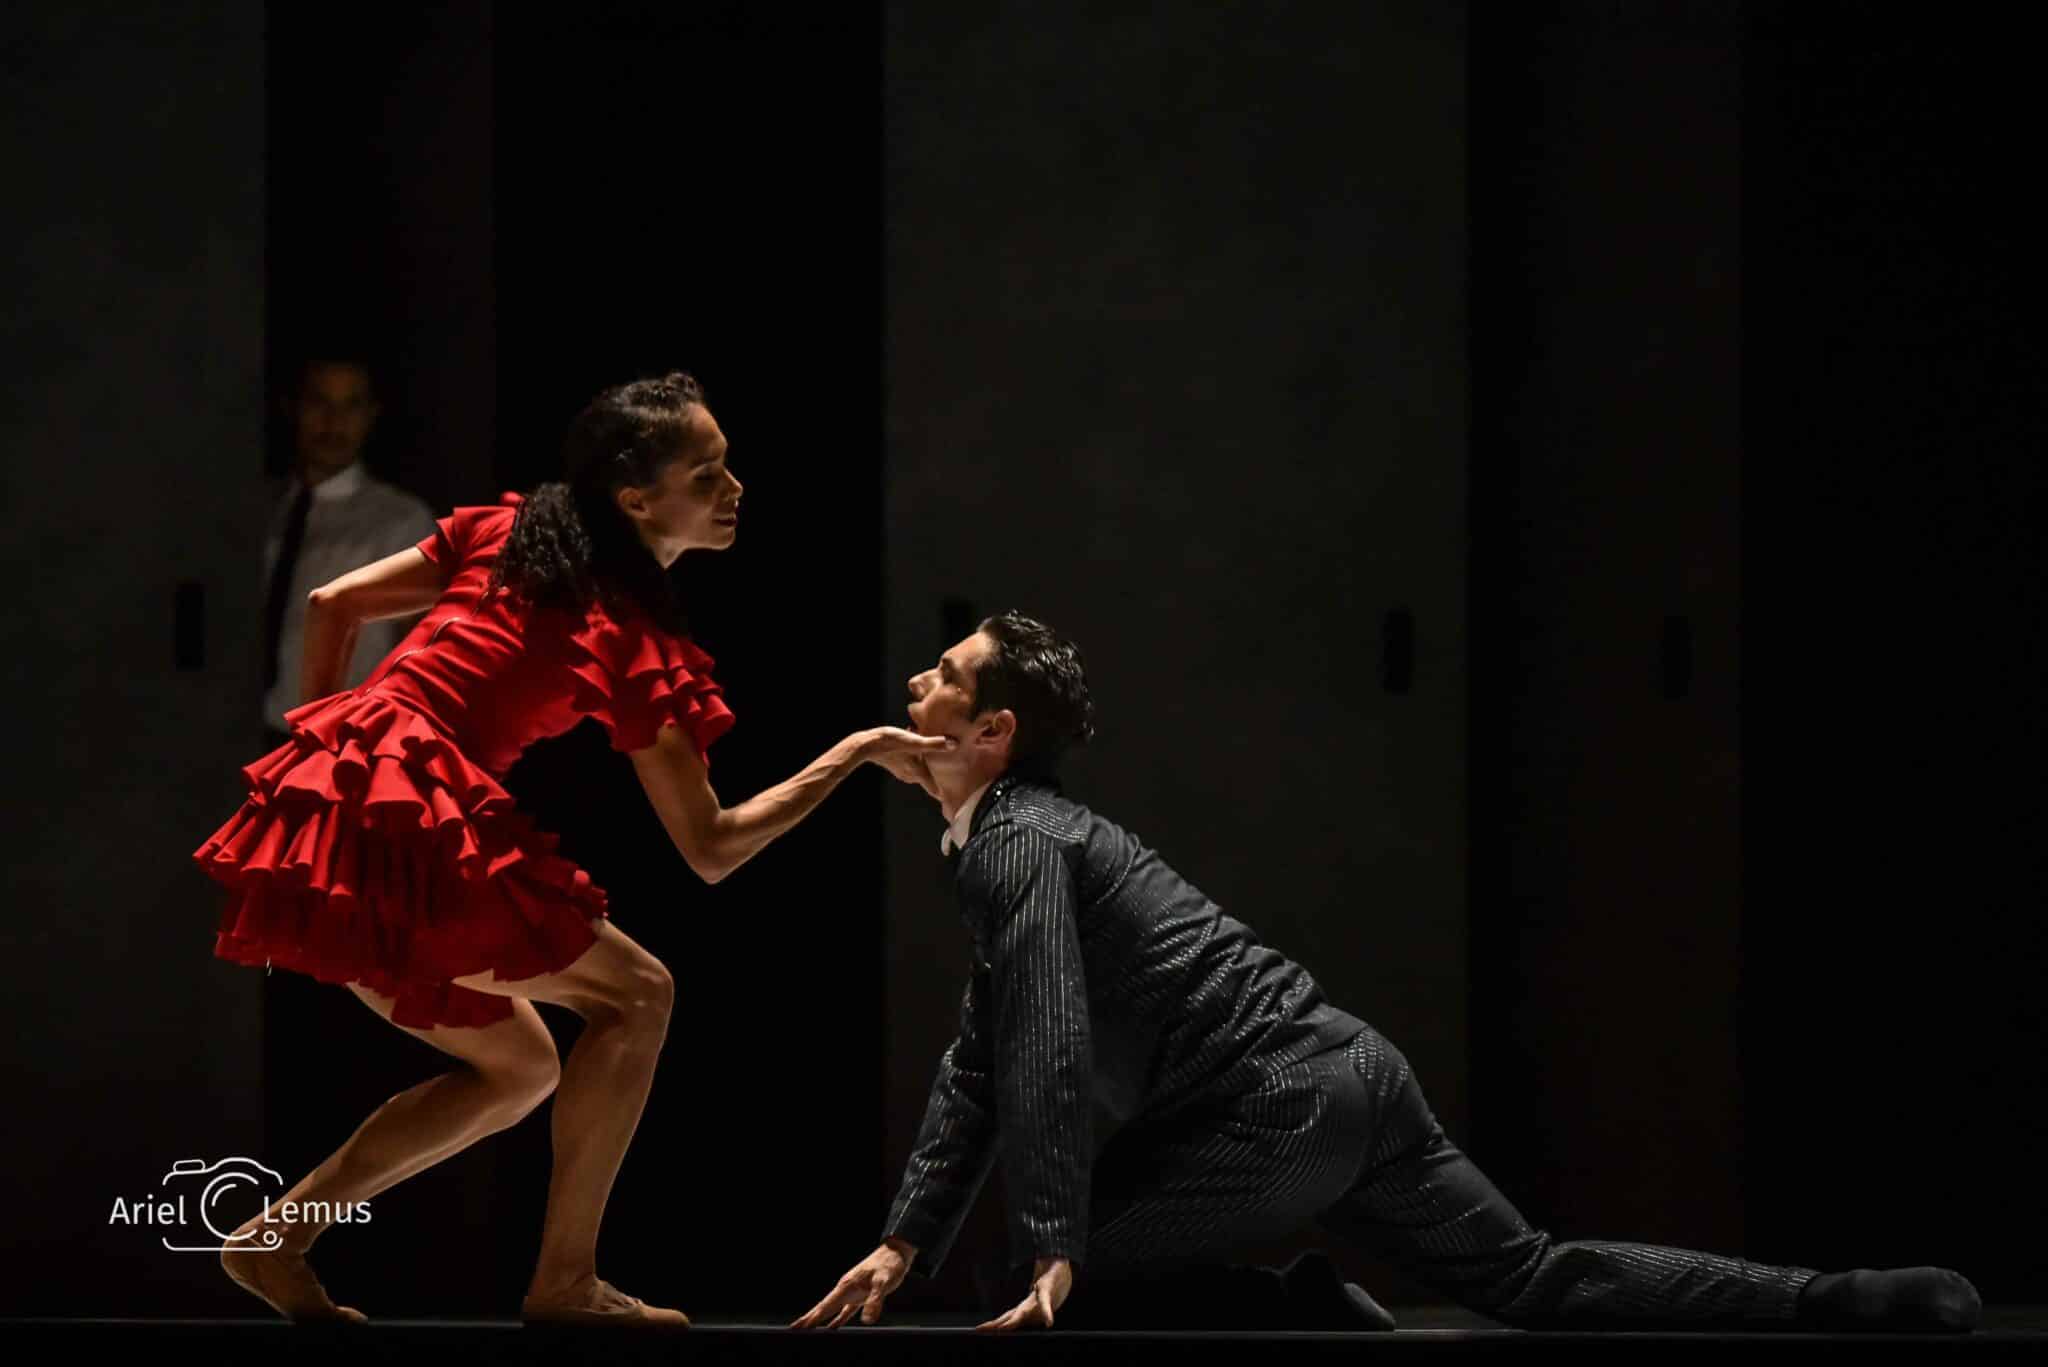 【KOHA News 新訊】伯努瓦舞蹈獎《卡門》首來台 西班牙國家舞團芭蕾舞作絕美綻放